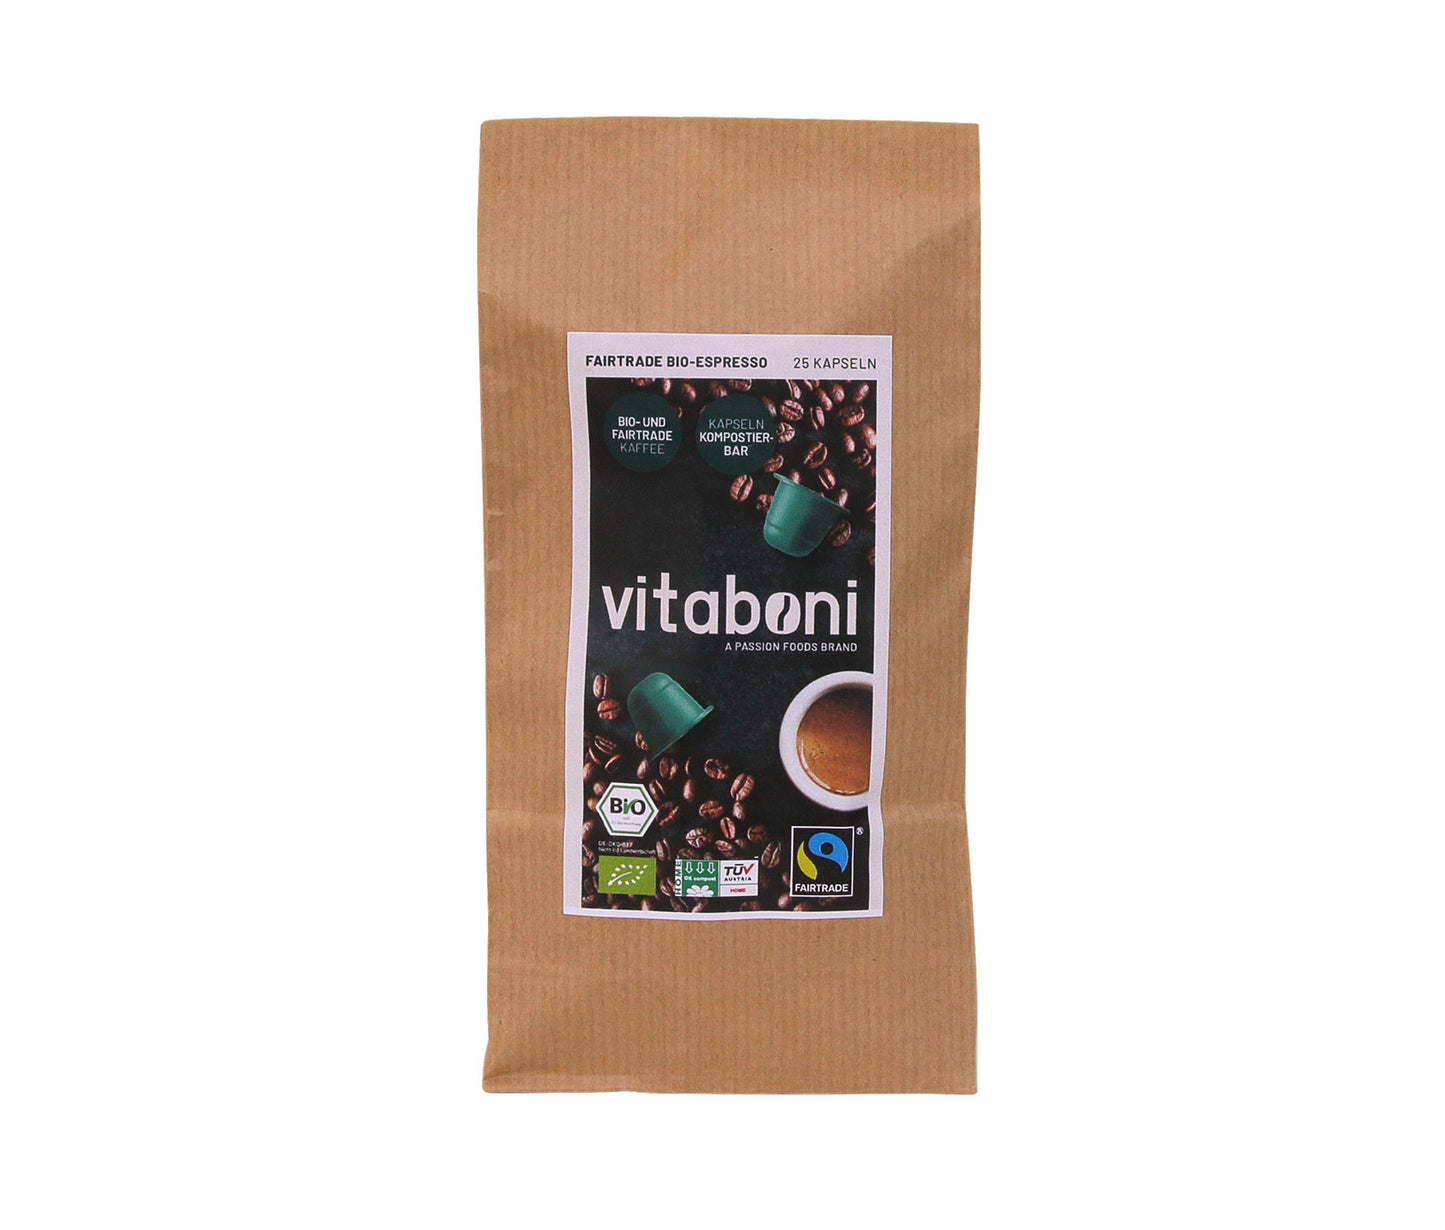 Vitaboni ® Bio Fairtrade Biodegradable Coffee Capsules | biologisch abbaubare Kaffeekapseln